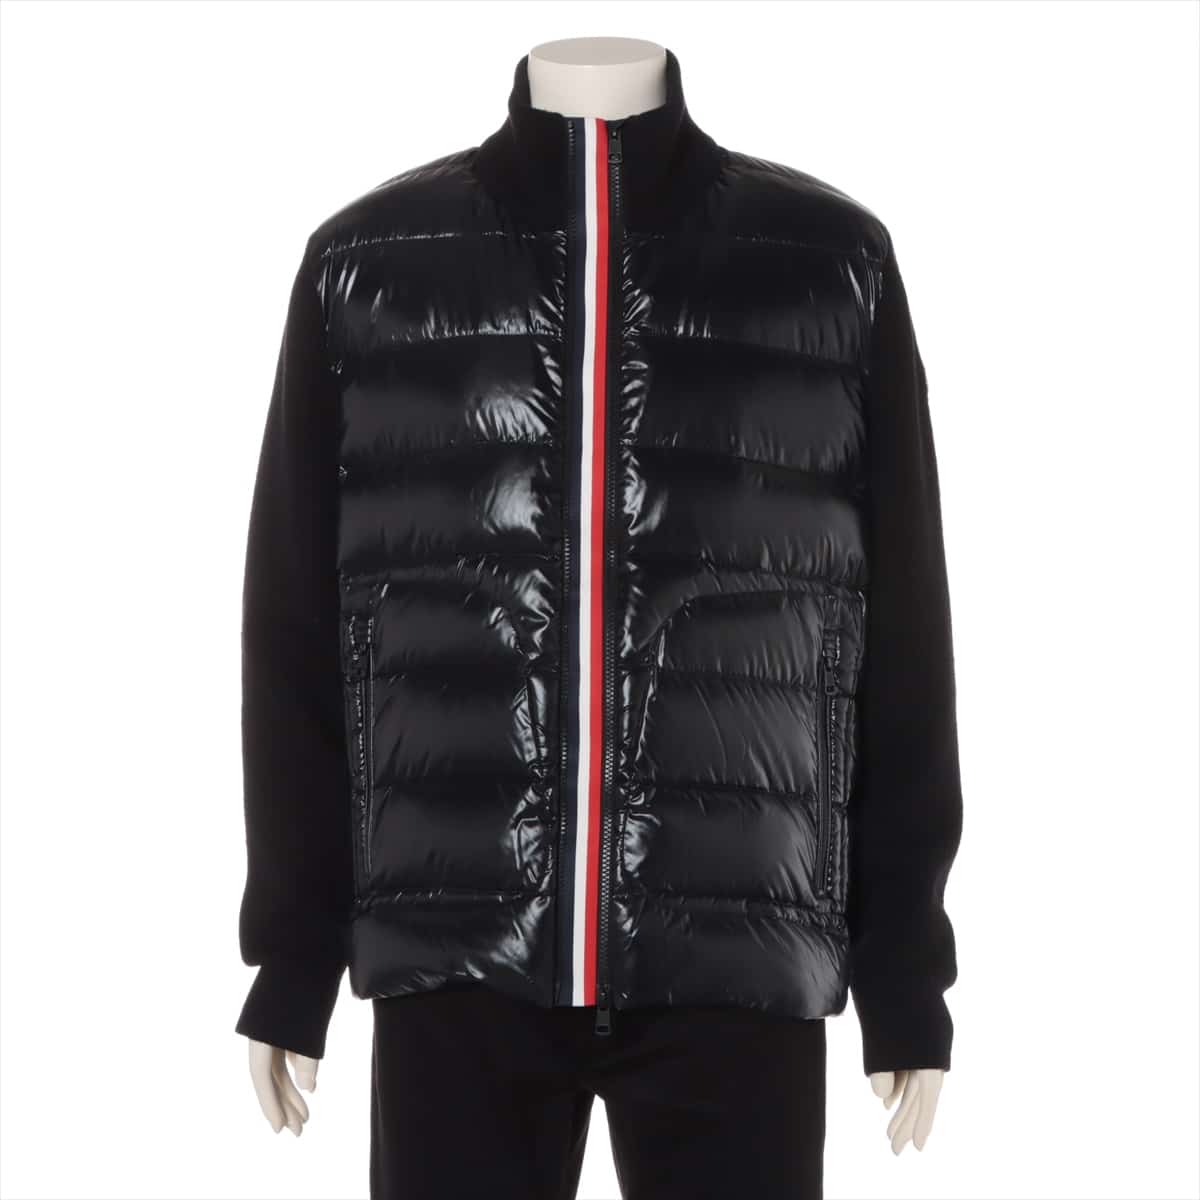 Moncler MAGLIONE 18 years Wool & Nylon Down jacket XL Men's Black  Switch knit